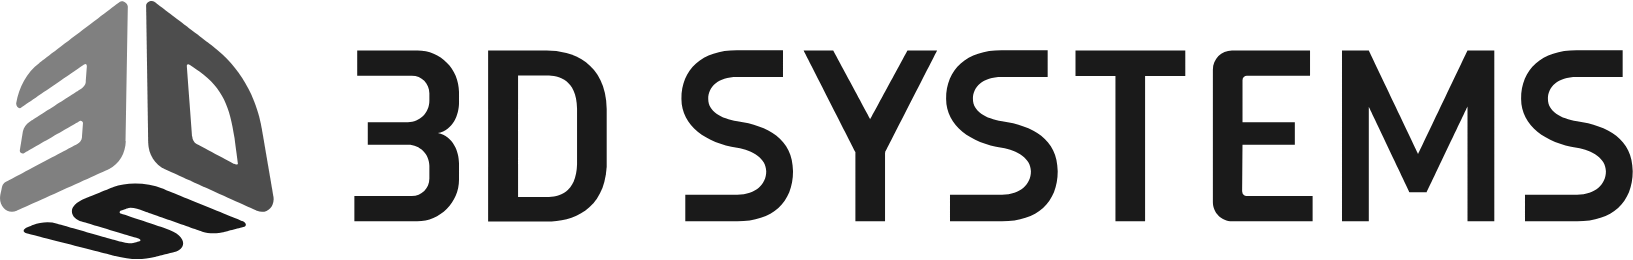 3D Systems logo large (transparent PNG)